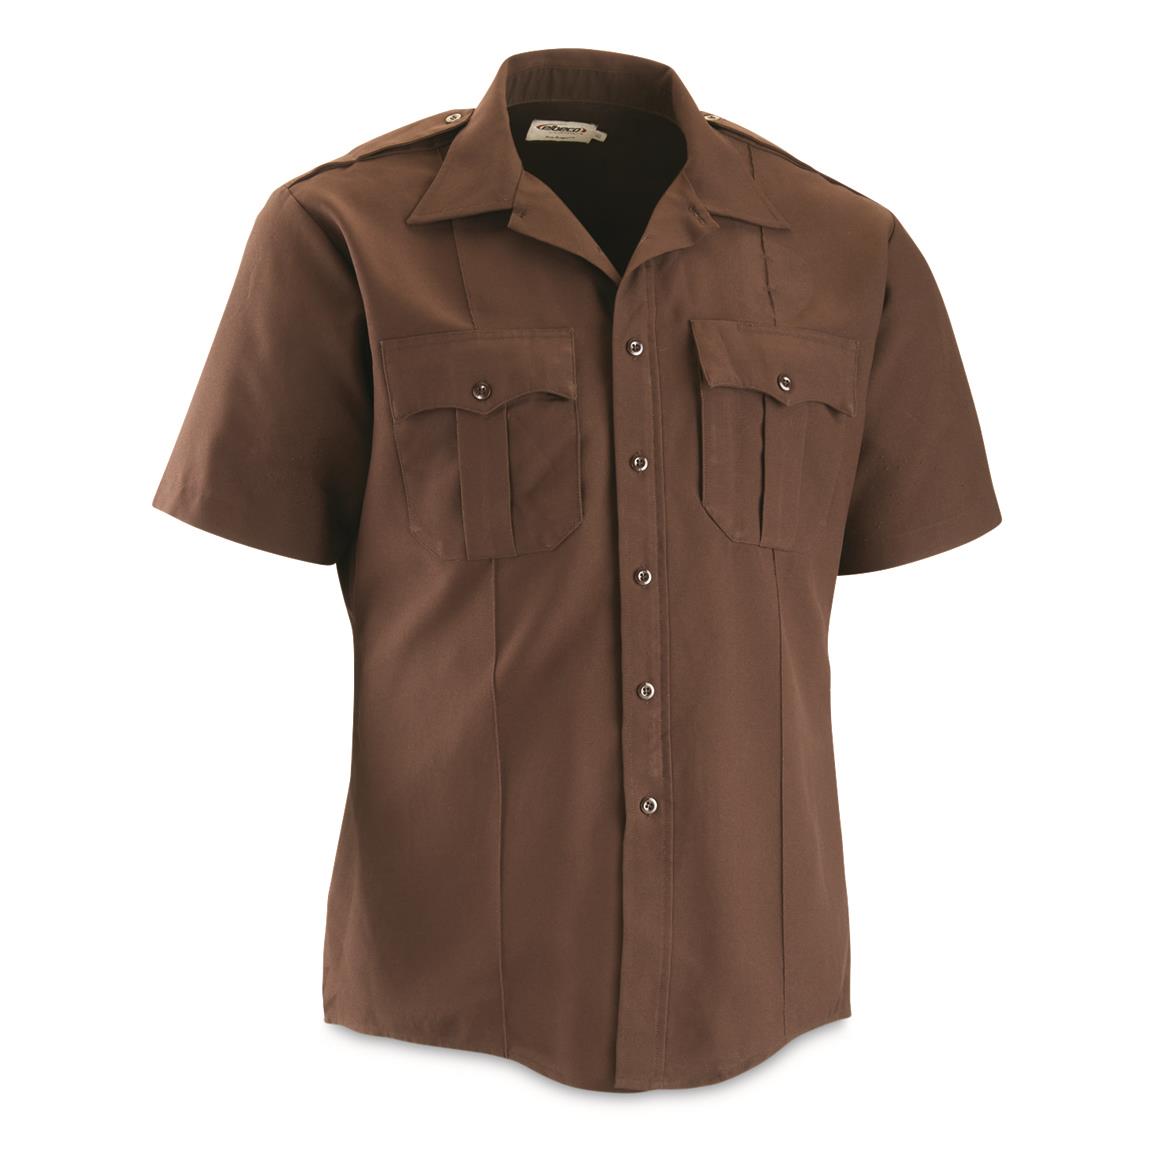 U.S. Municipal Surplus LA County Sheriff Uniform Shirt, New, Brown